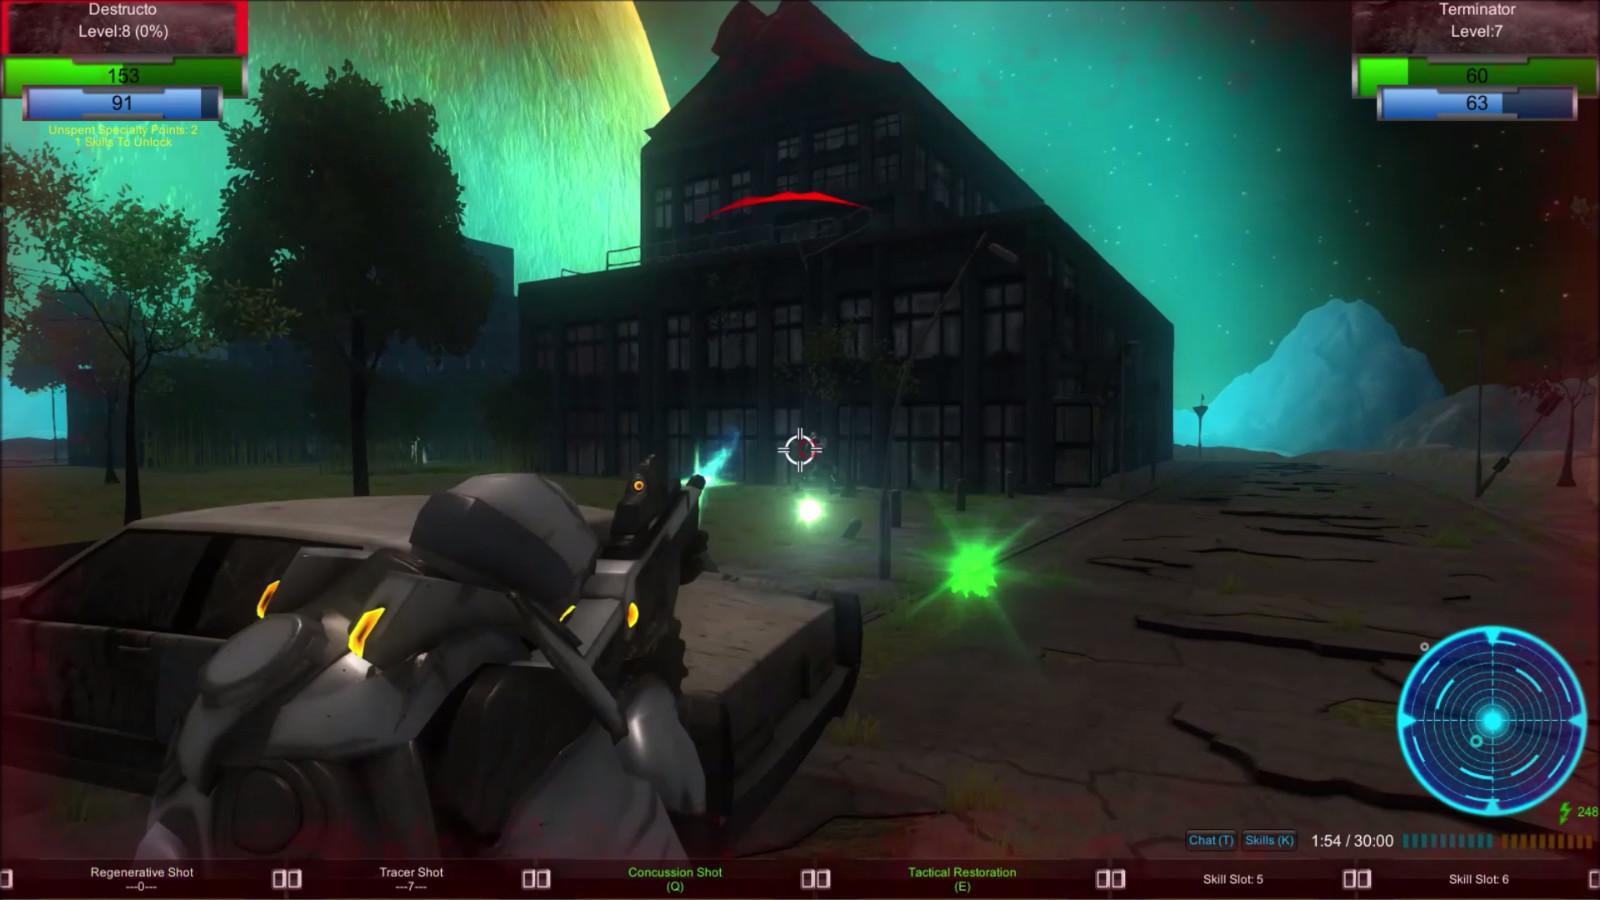 Screenshot №6 from game CLASH